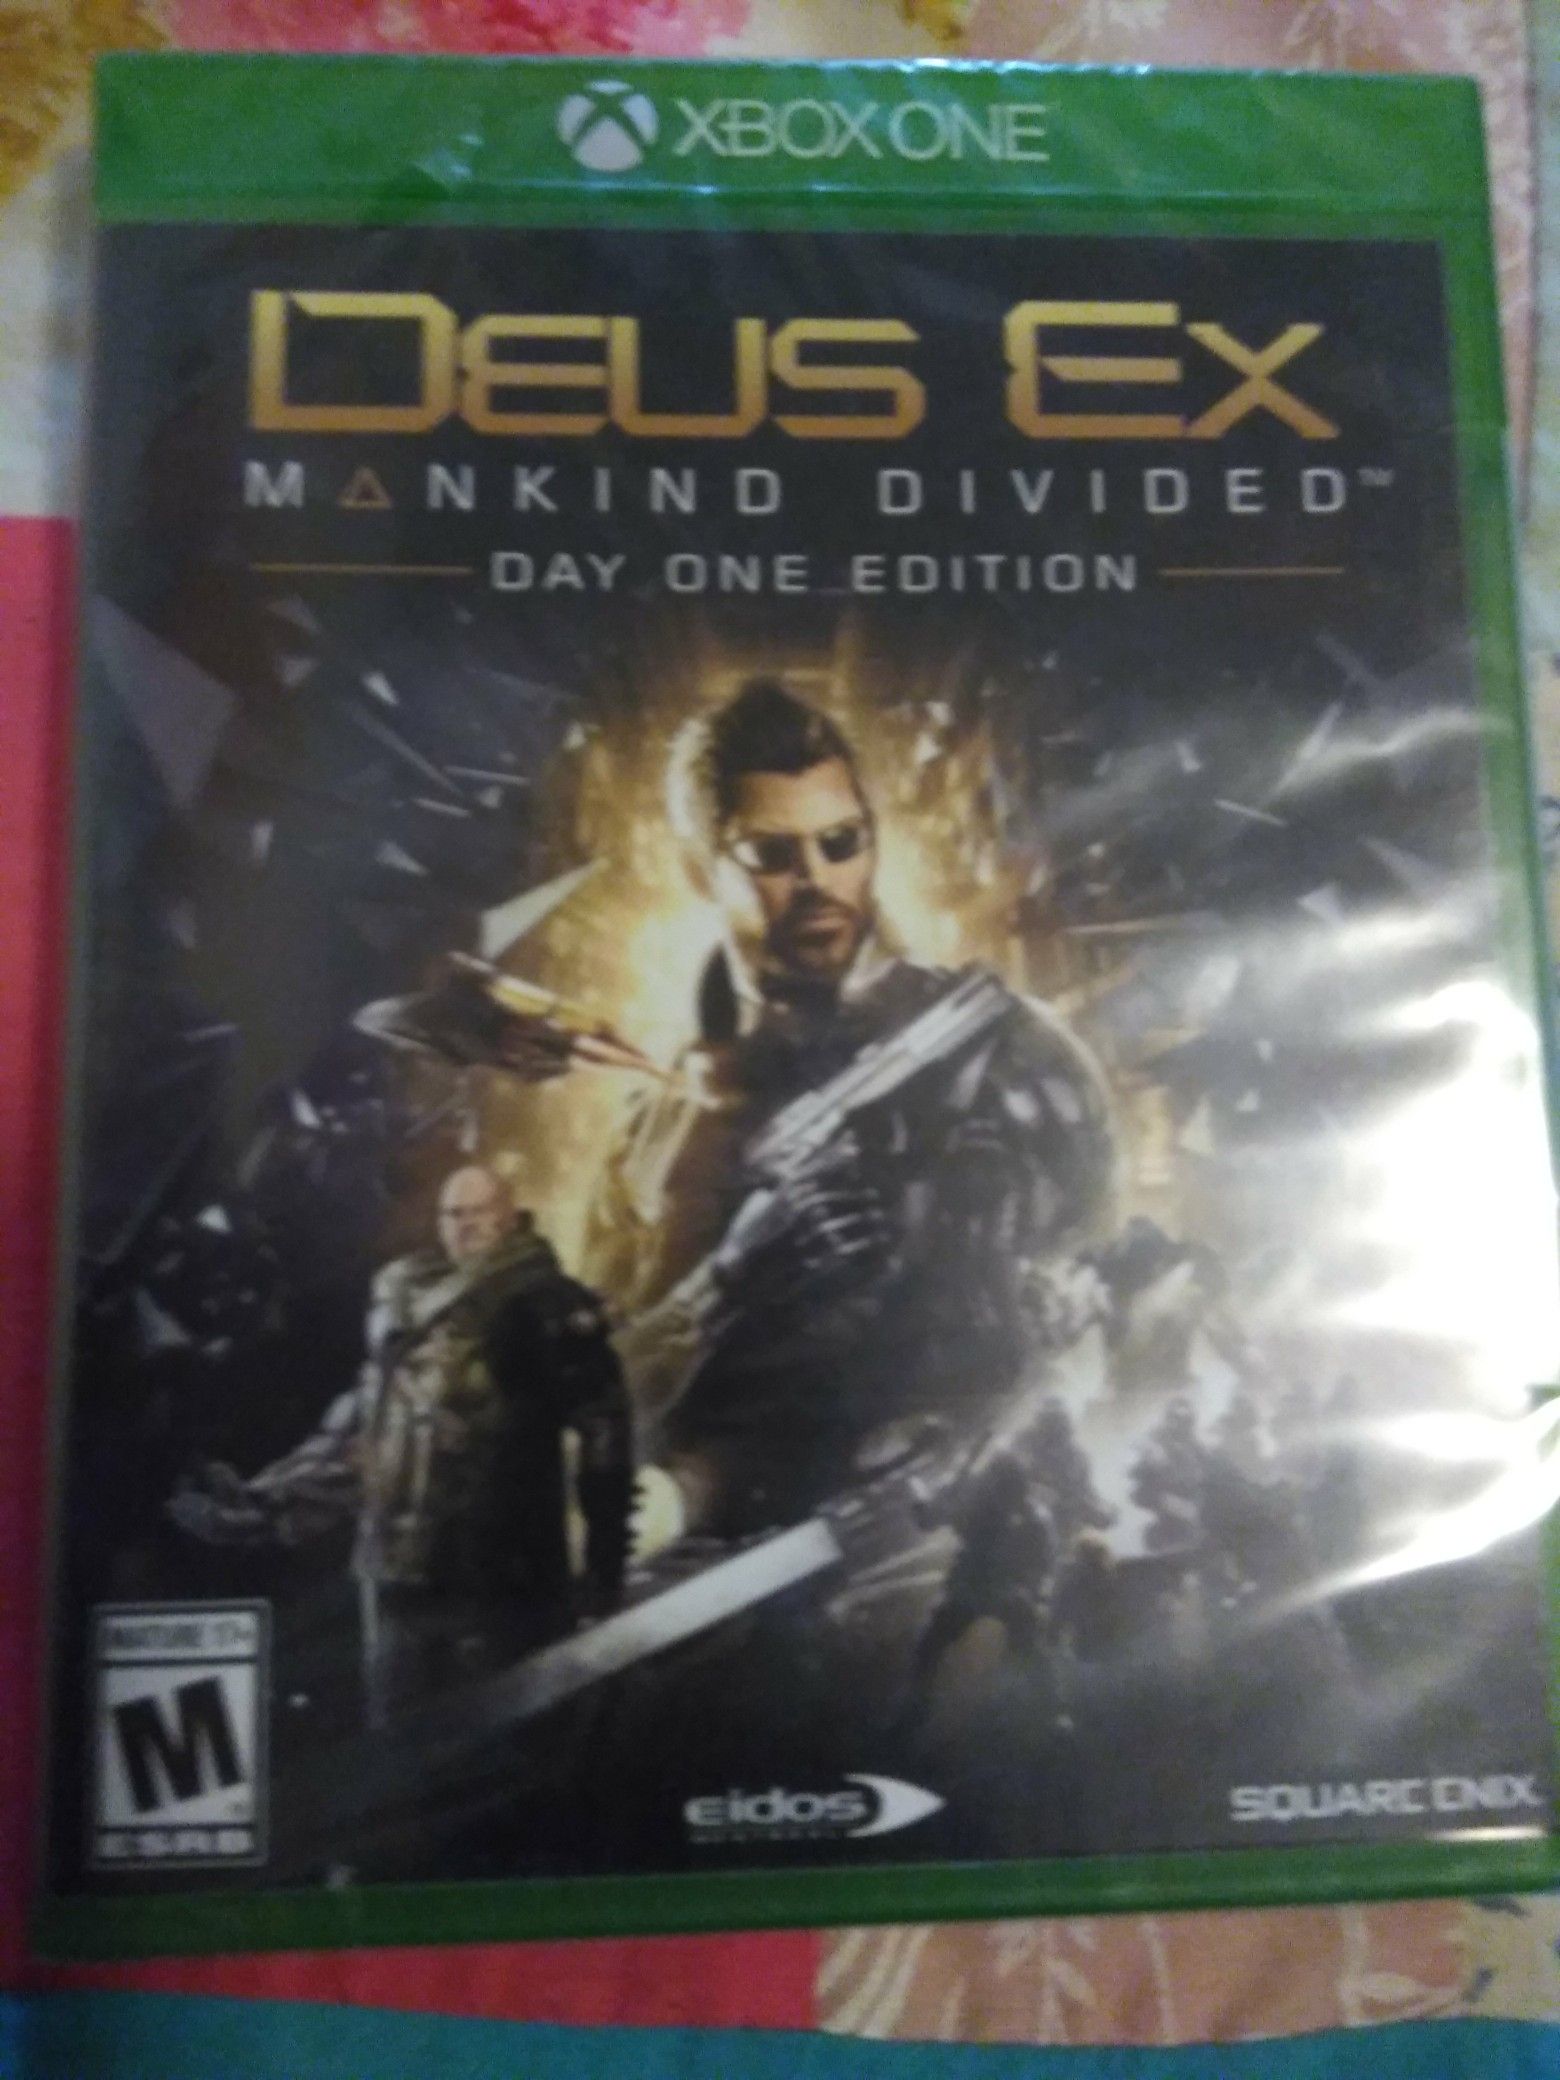 XBOX ONE Deus Ex and Lego Batman Game